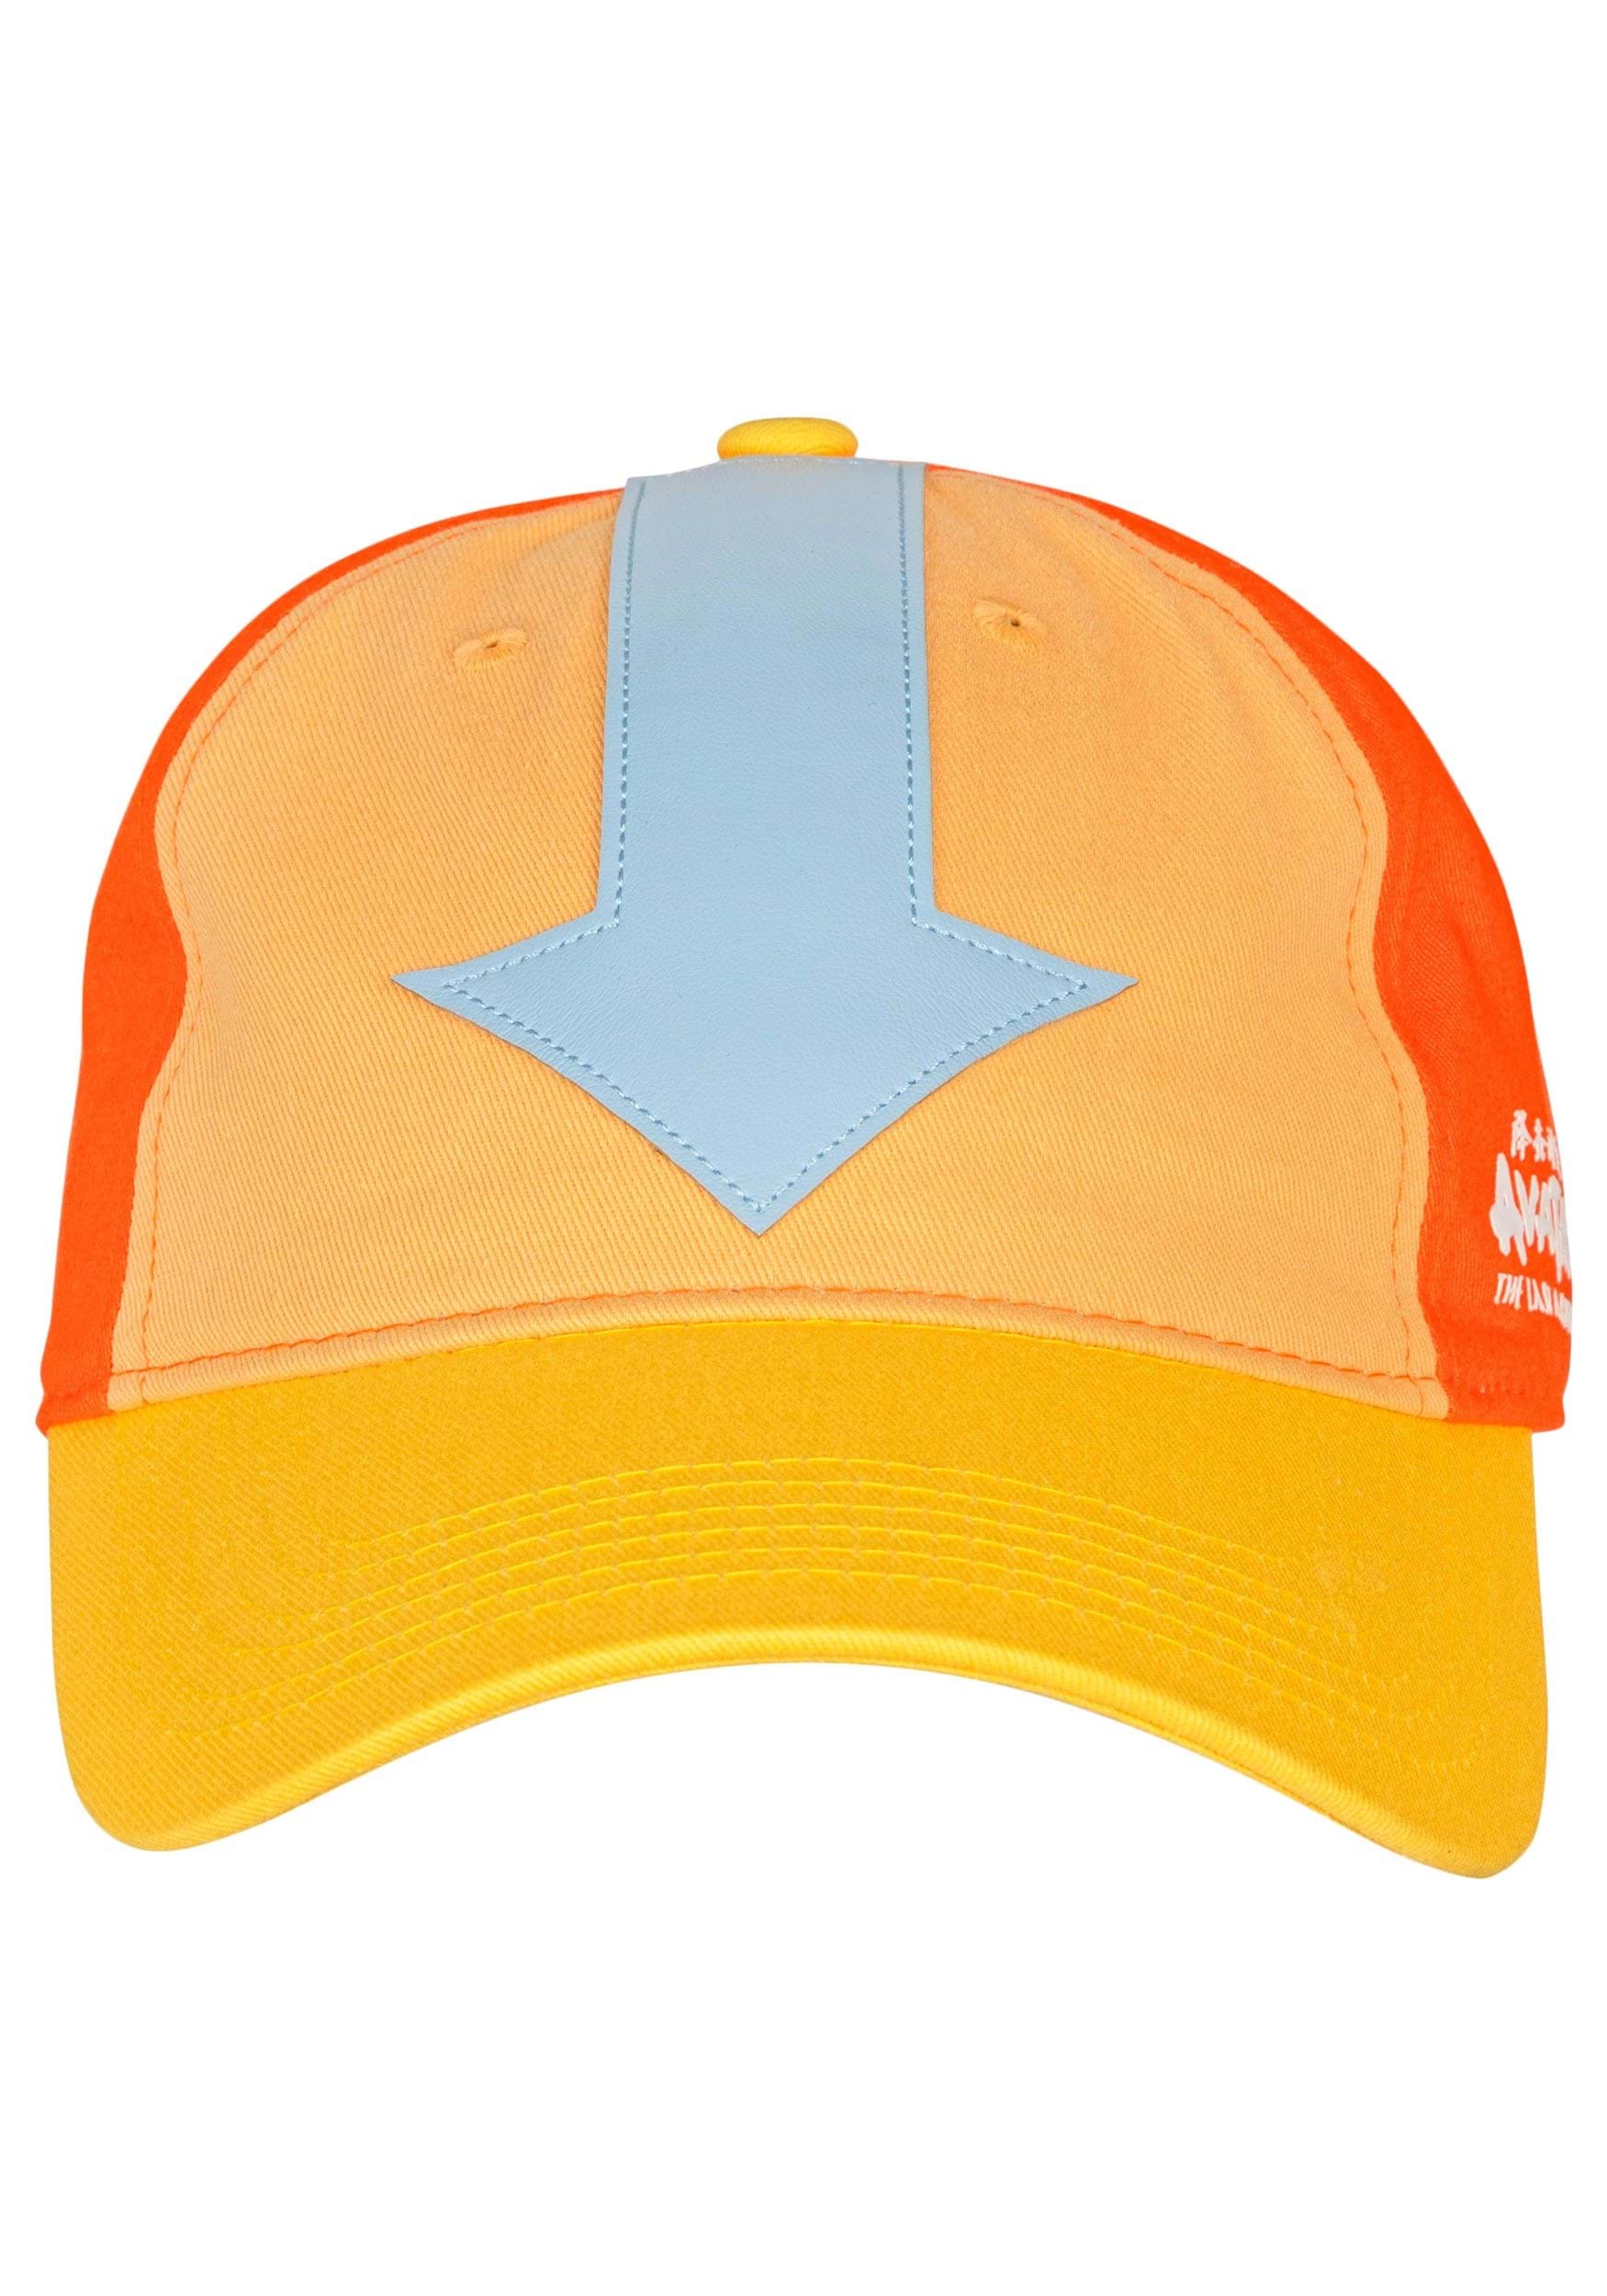 Avatar Airbender Mark Hat , Baseball Hat Accessories